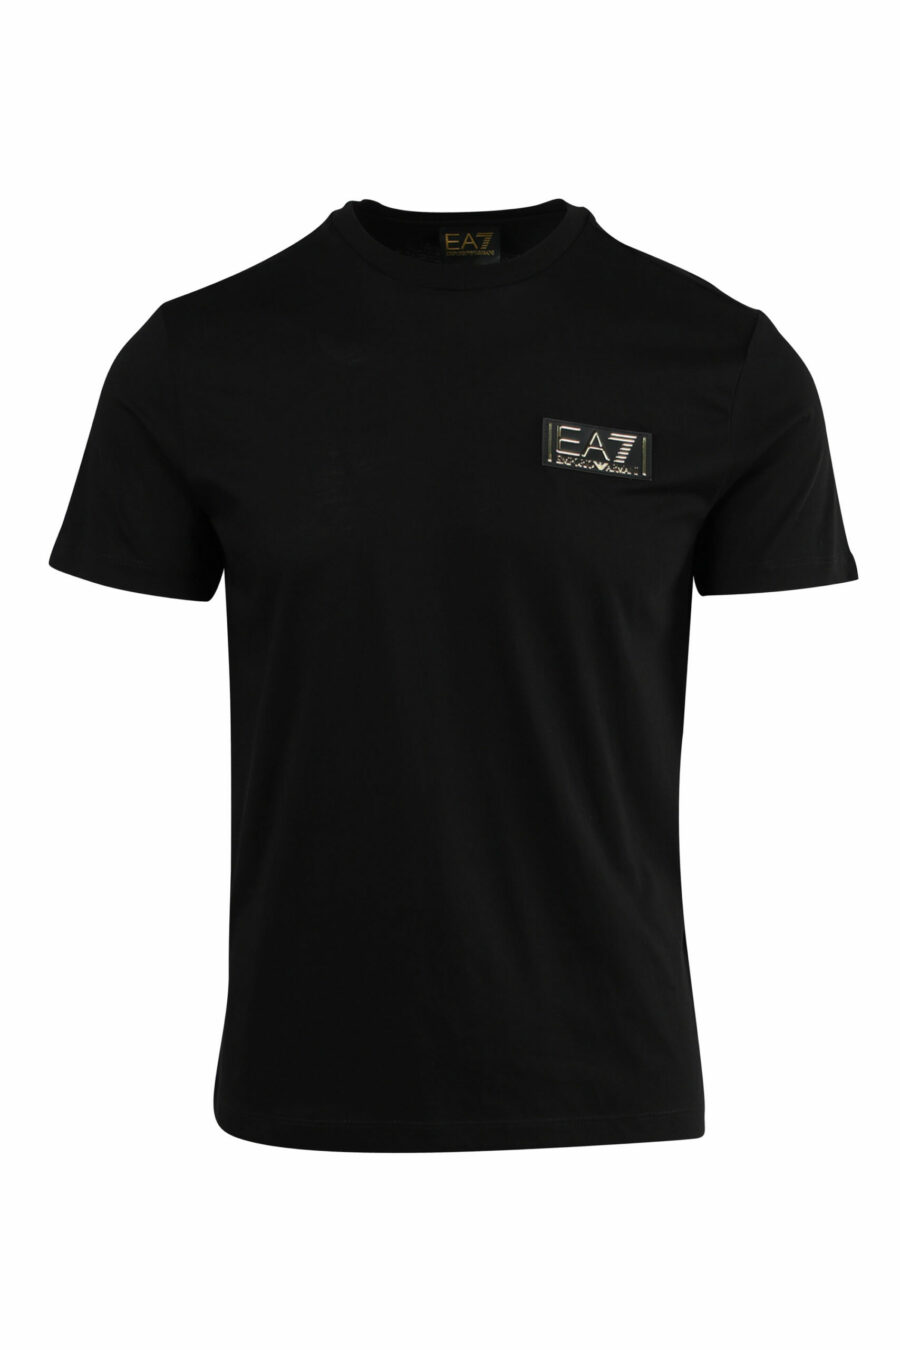 T-shirt preta com mini-logotipo dourado "lux identity" - 8057767515805 scaled